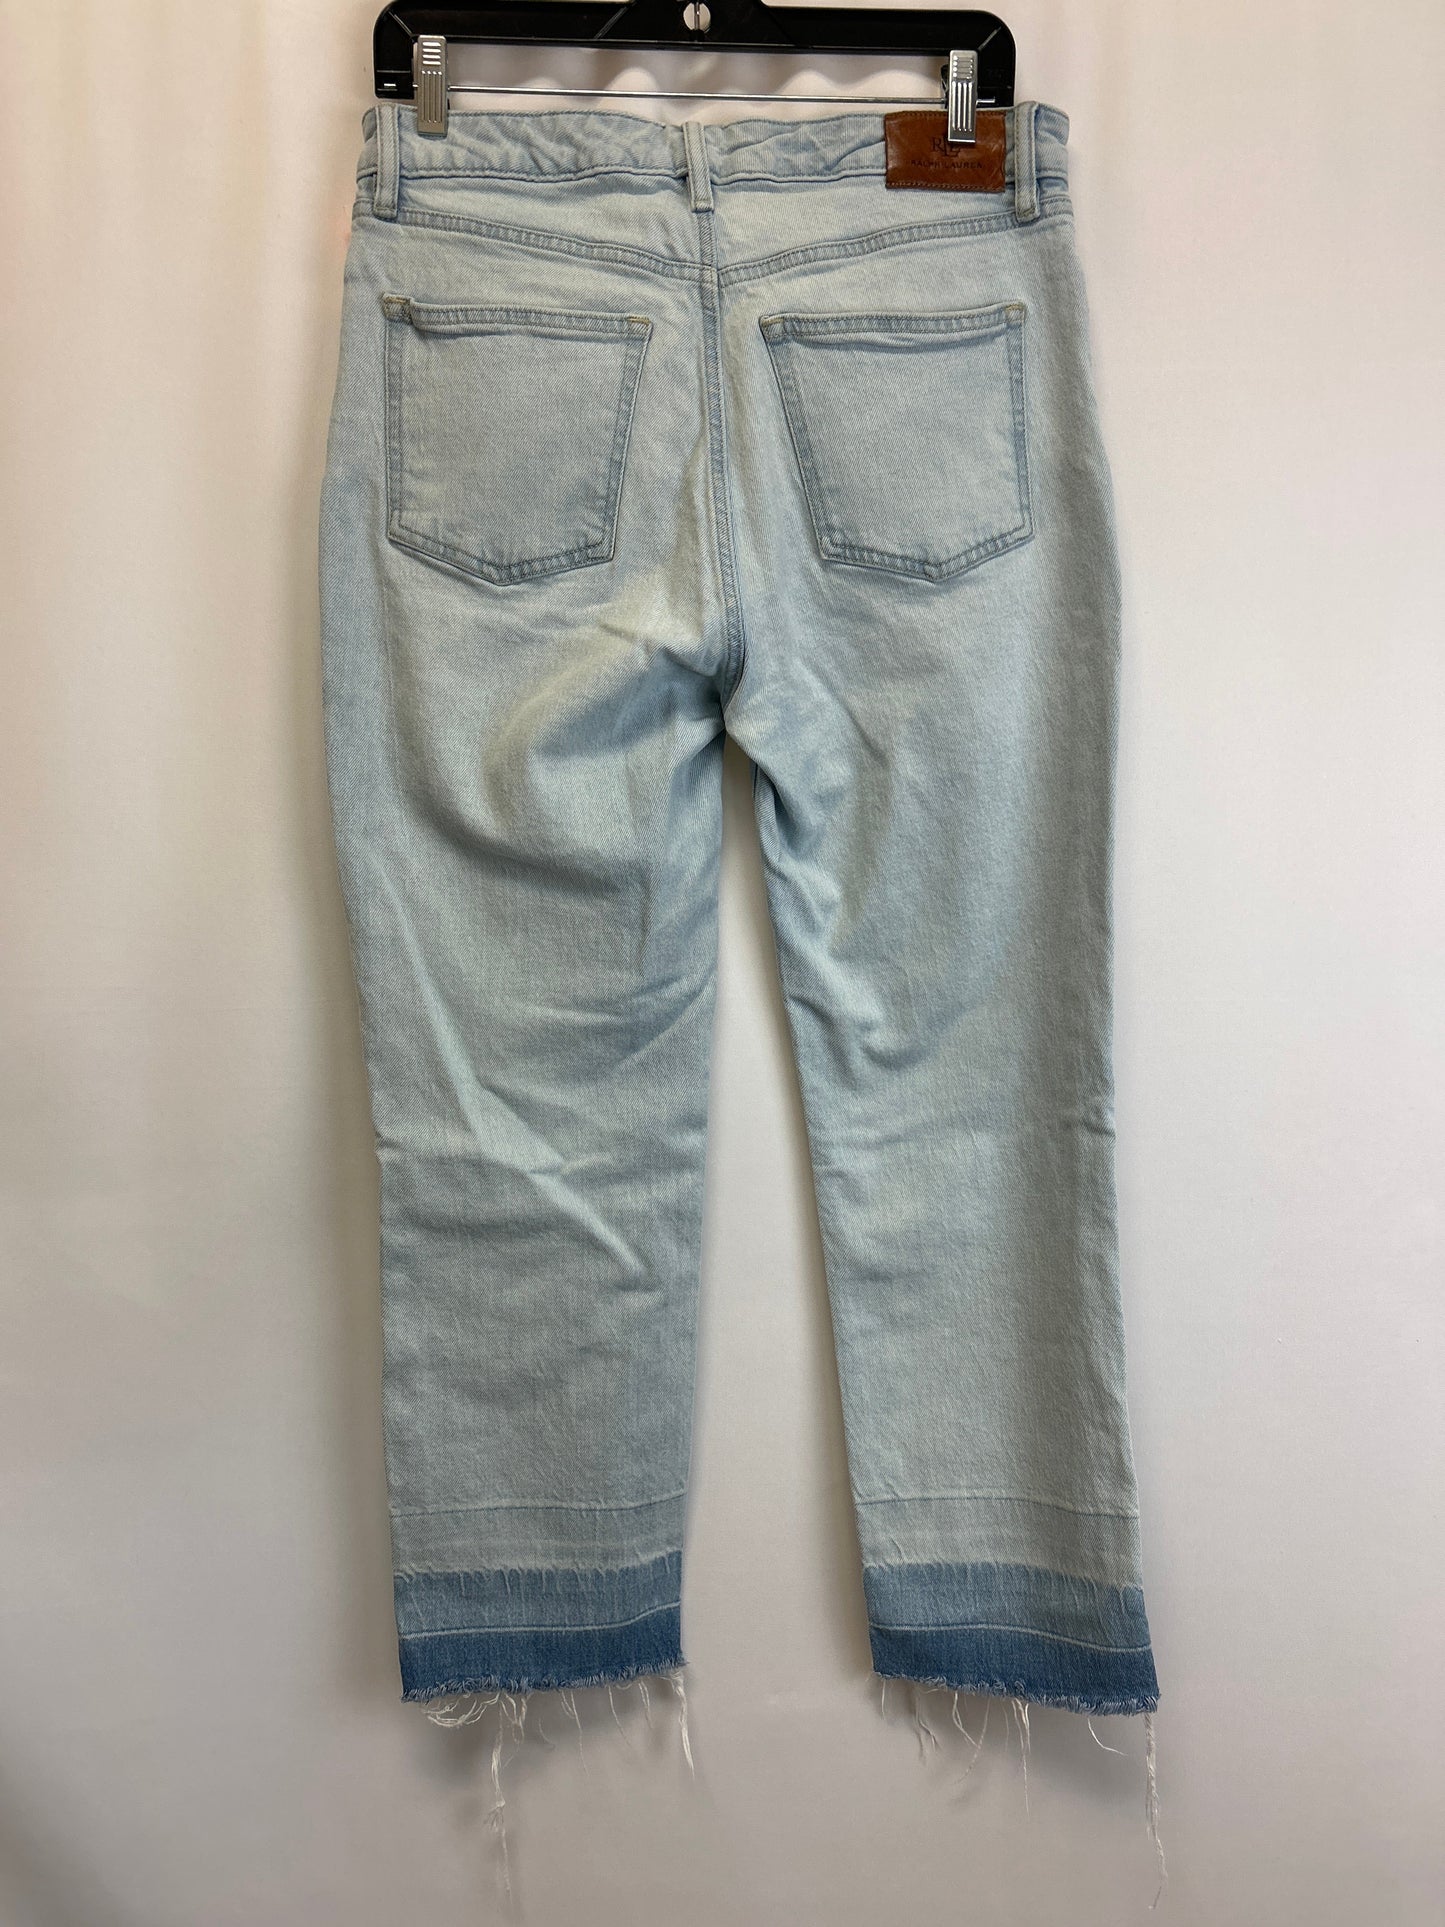 Jeans Straight By Lauren By Ralph Lauren  Size: 10